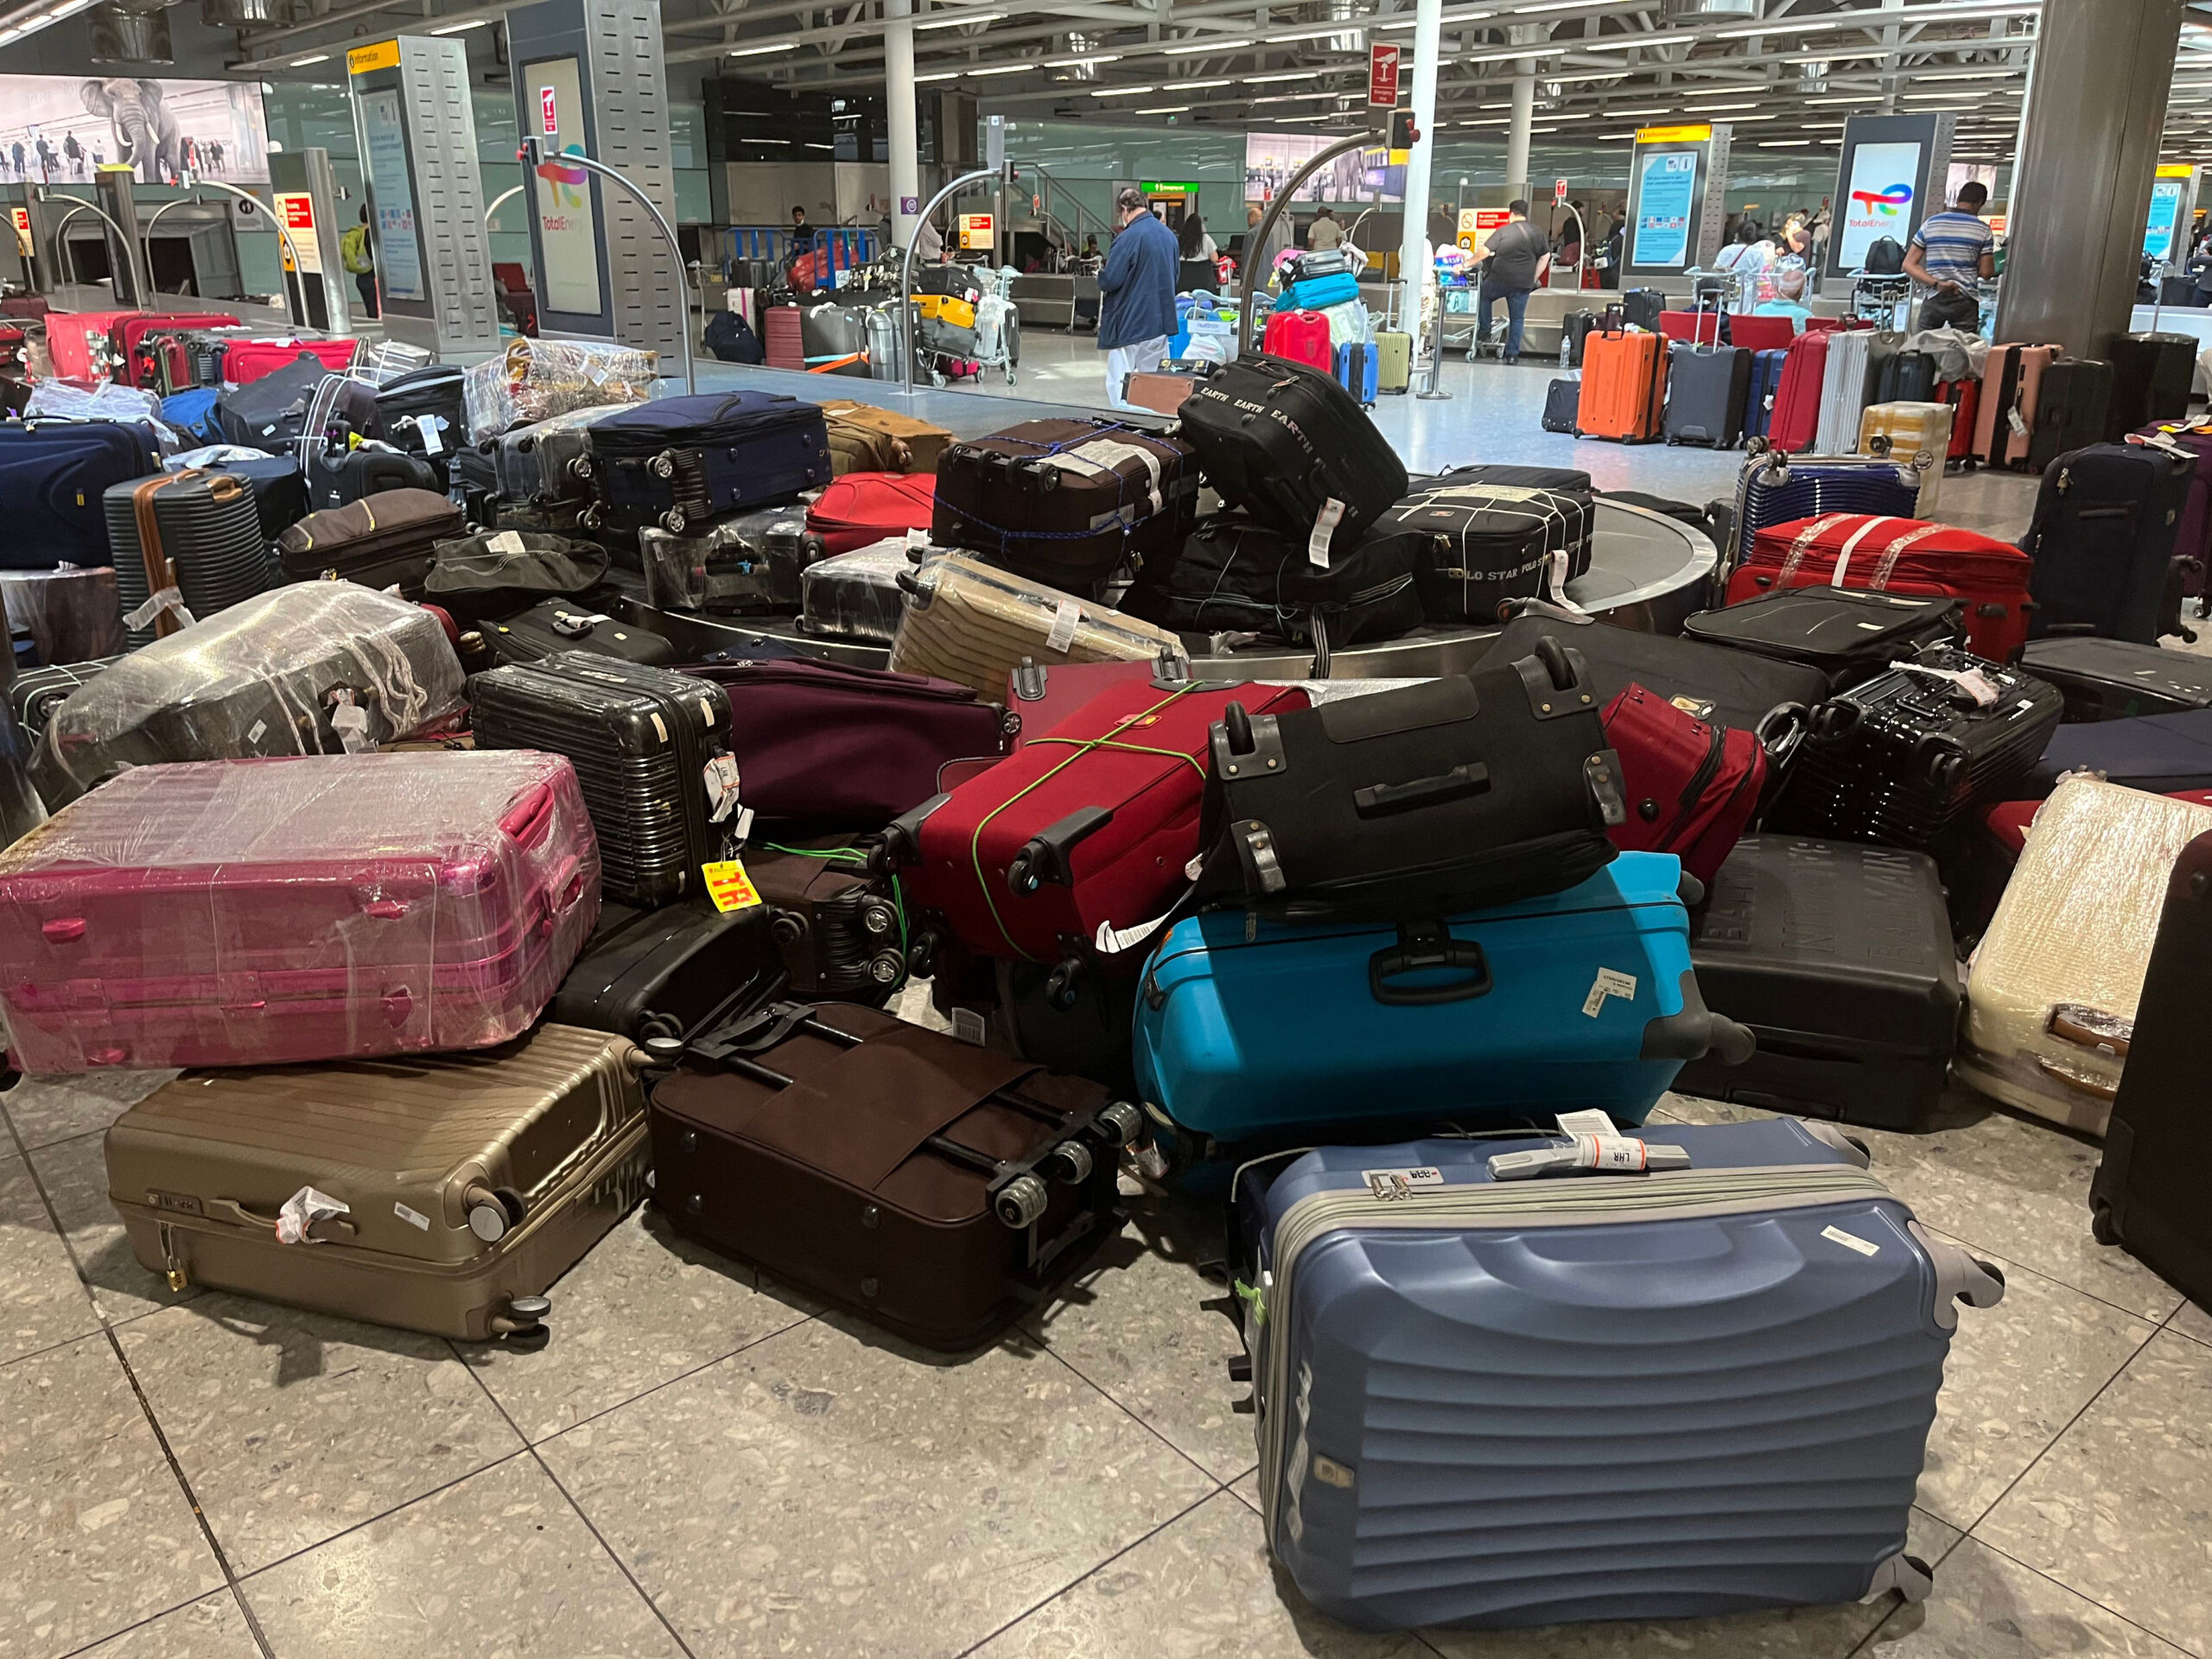 San Franciscans’ European Summer Vacations Ending In Baggage Nightmares, Customer Service Purgatory